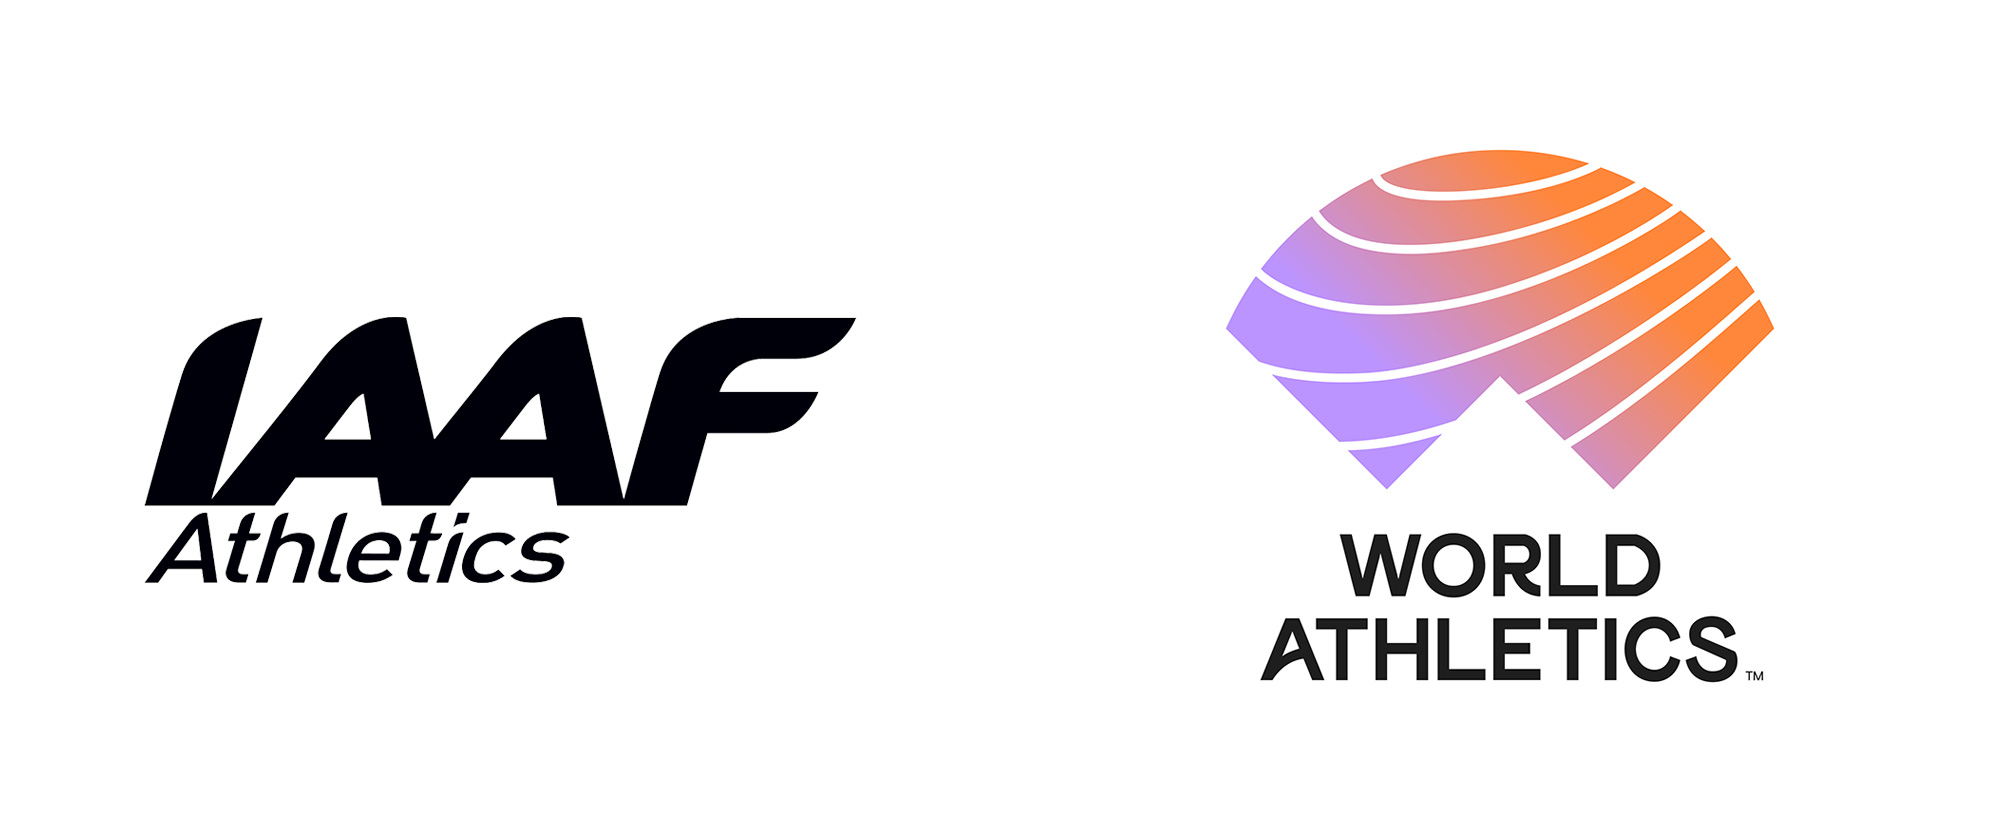 https://www.underconsideration.com/brandnew/archives/world_athletics_logo_before_after.jpg